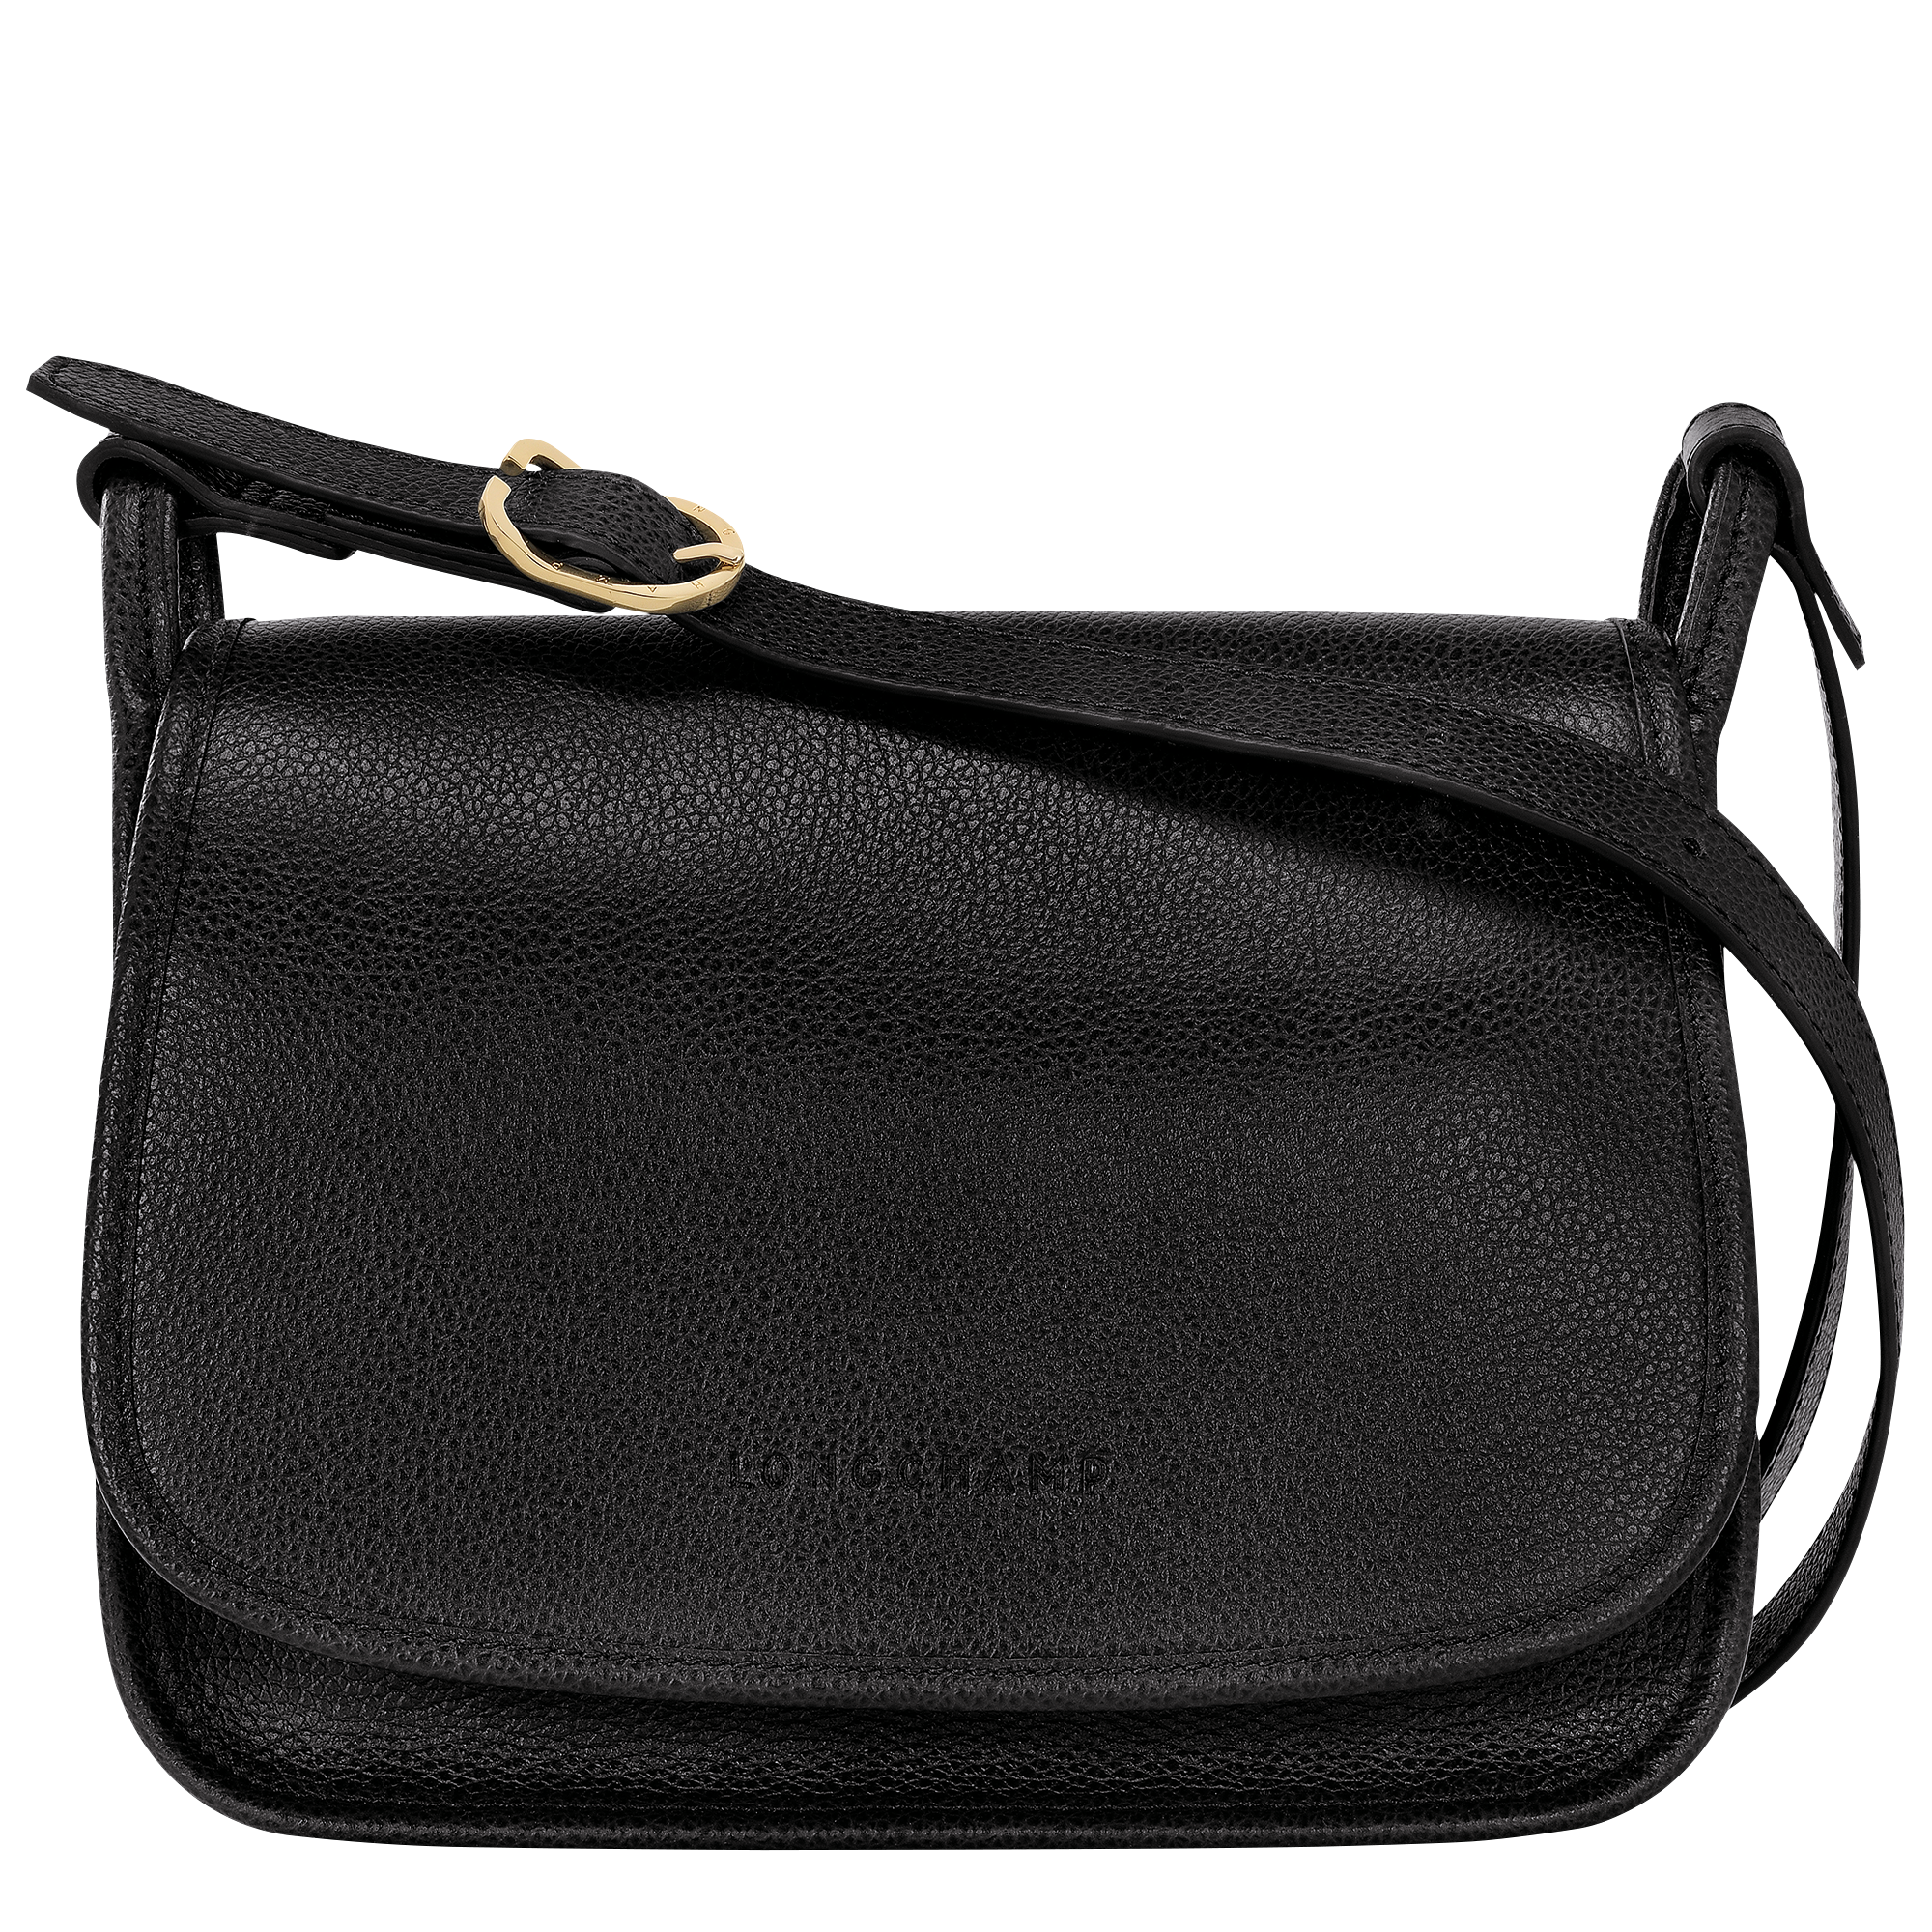 S black crossbody bag